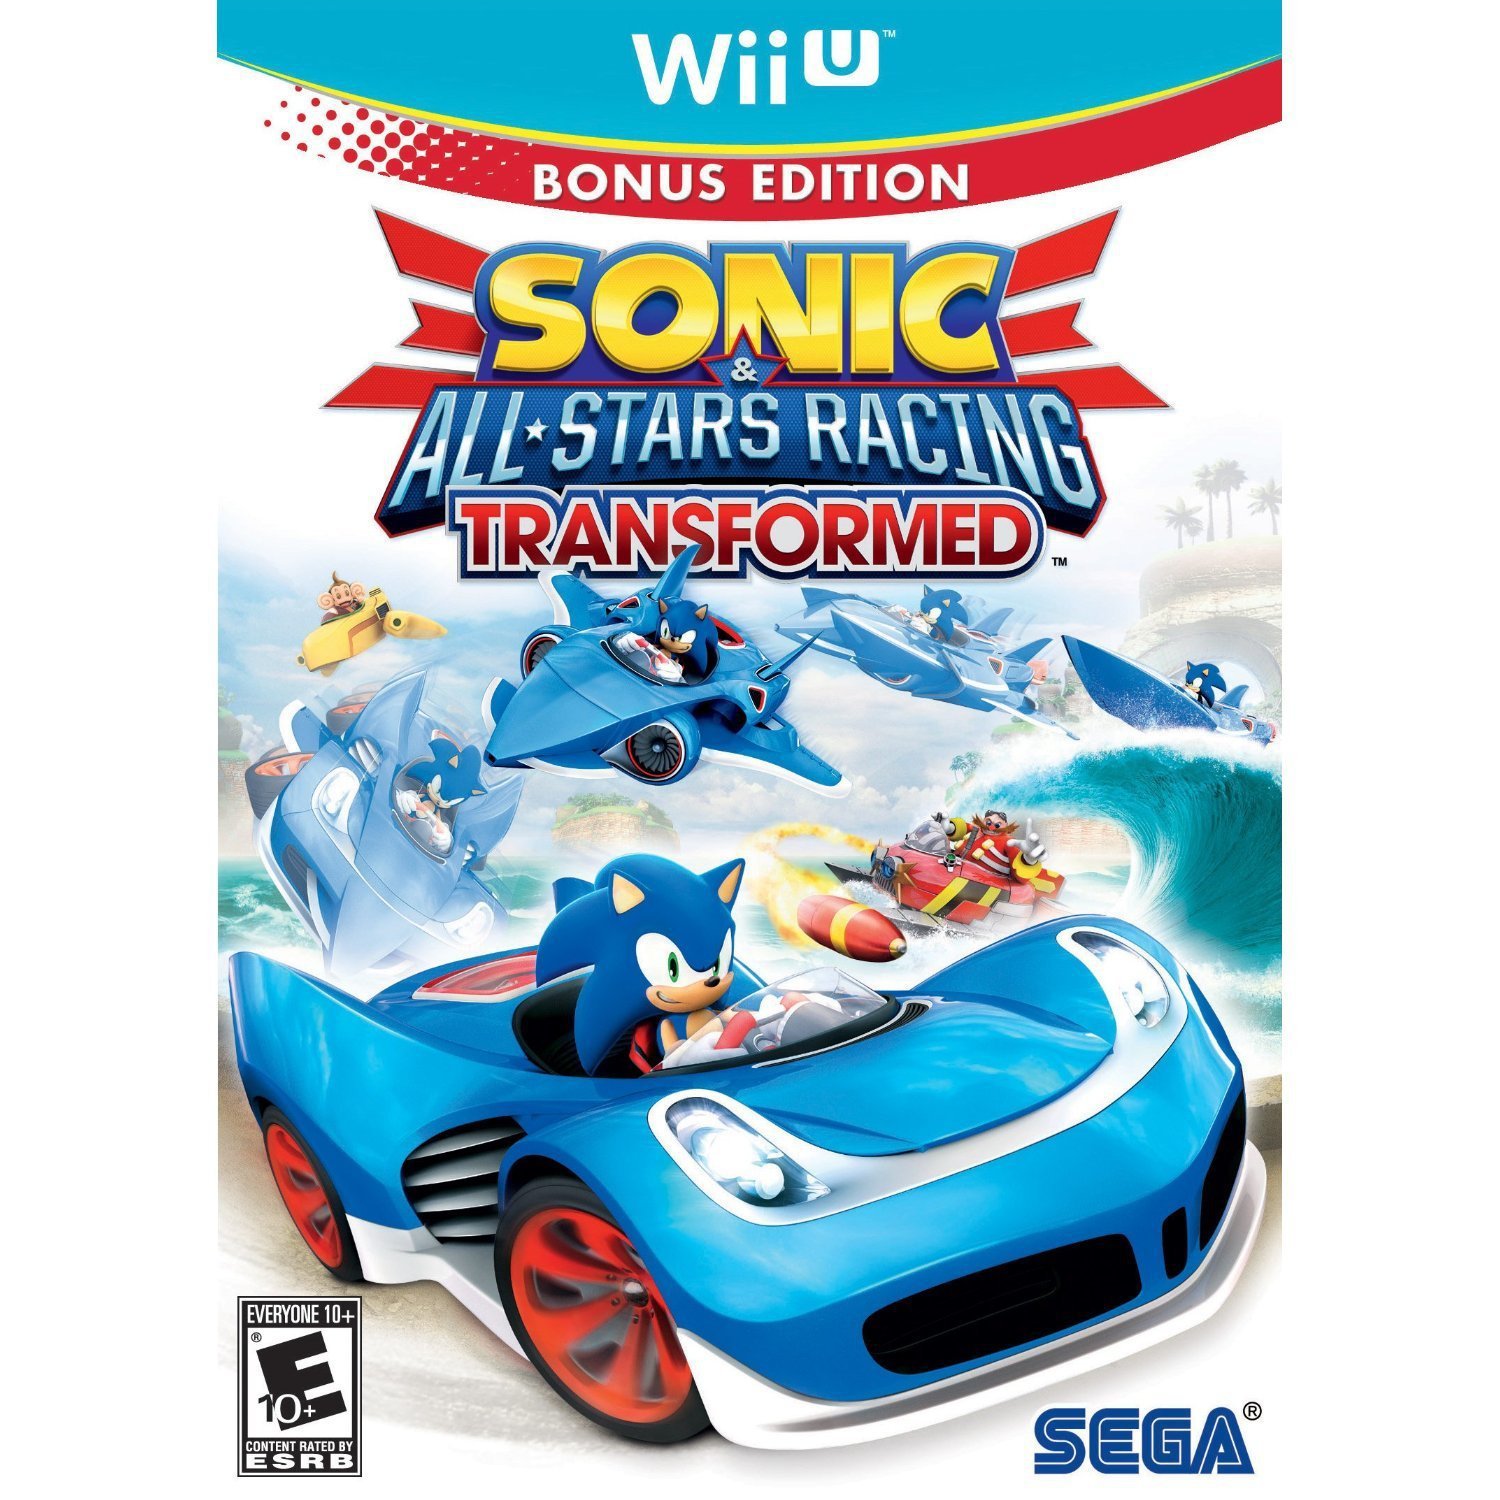 Sonic & All Stars Racing